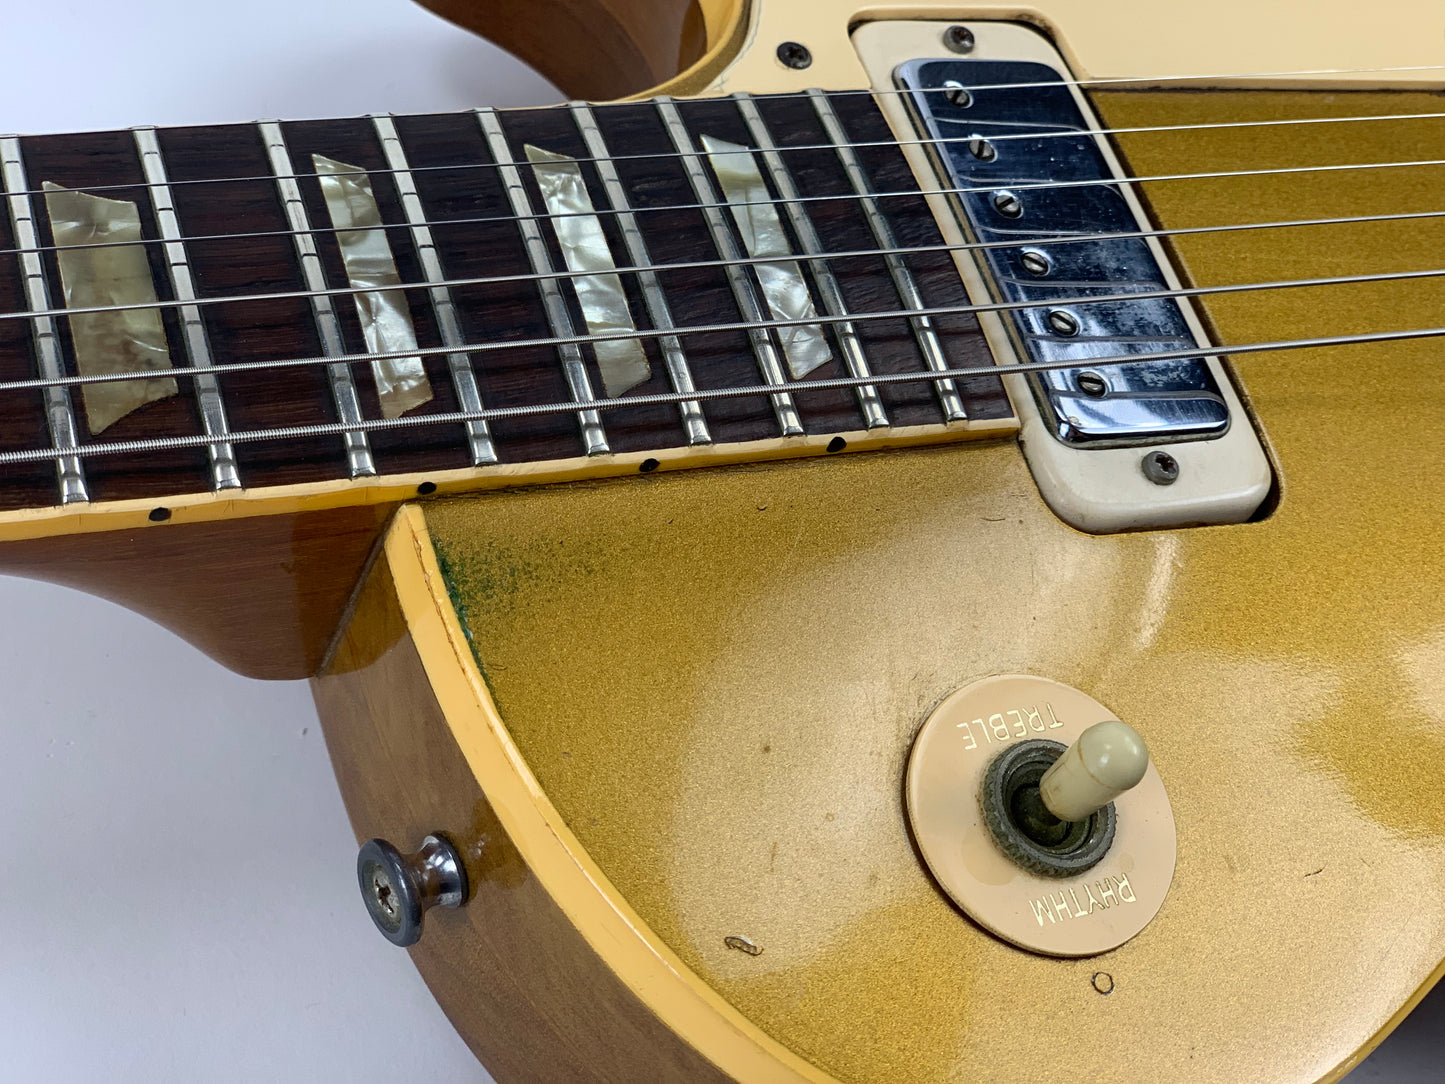 1973 Gibson Les Paul Deluxe Goldtop | 2 Mini Humbuckers, Original Case! Vintage Guitar! standard custom